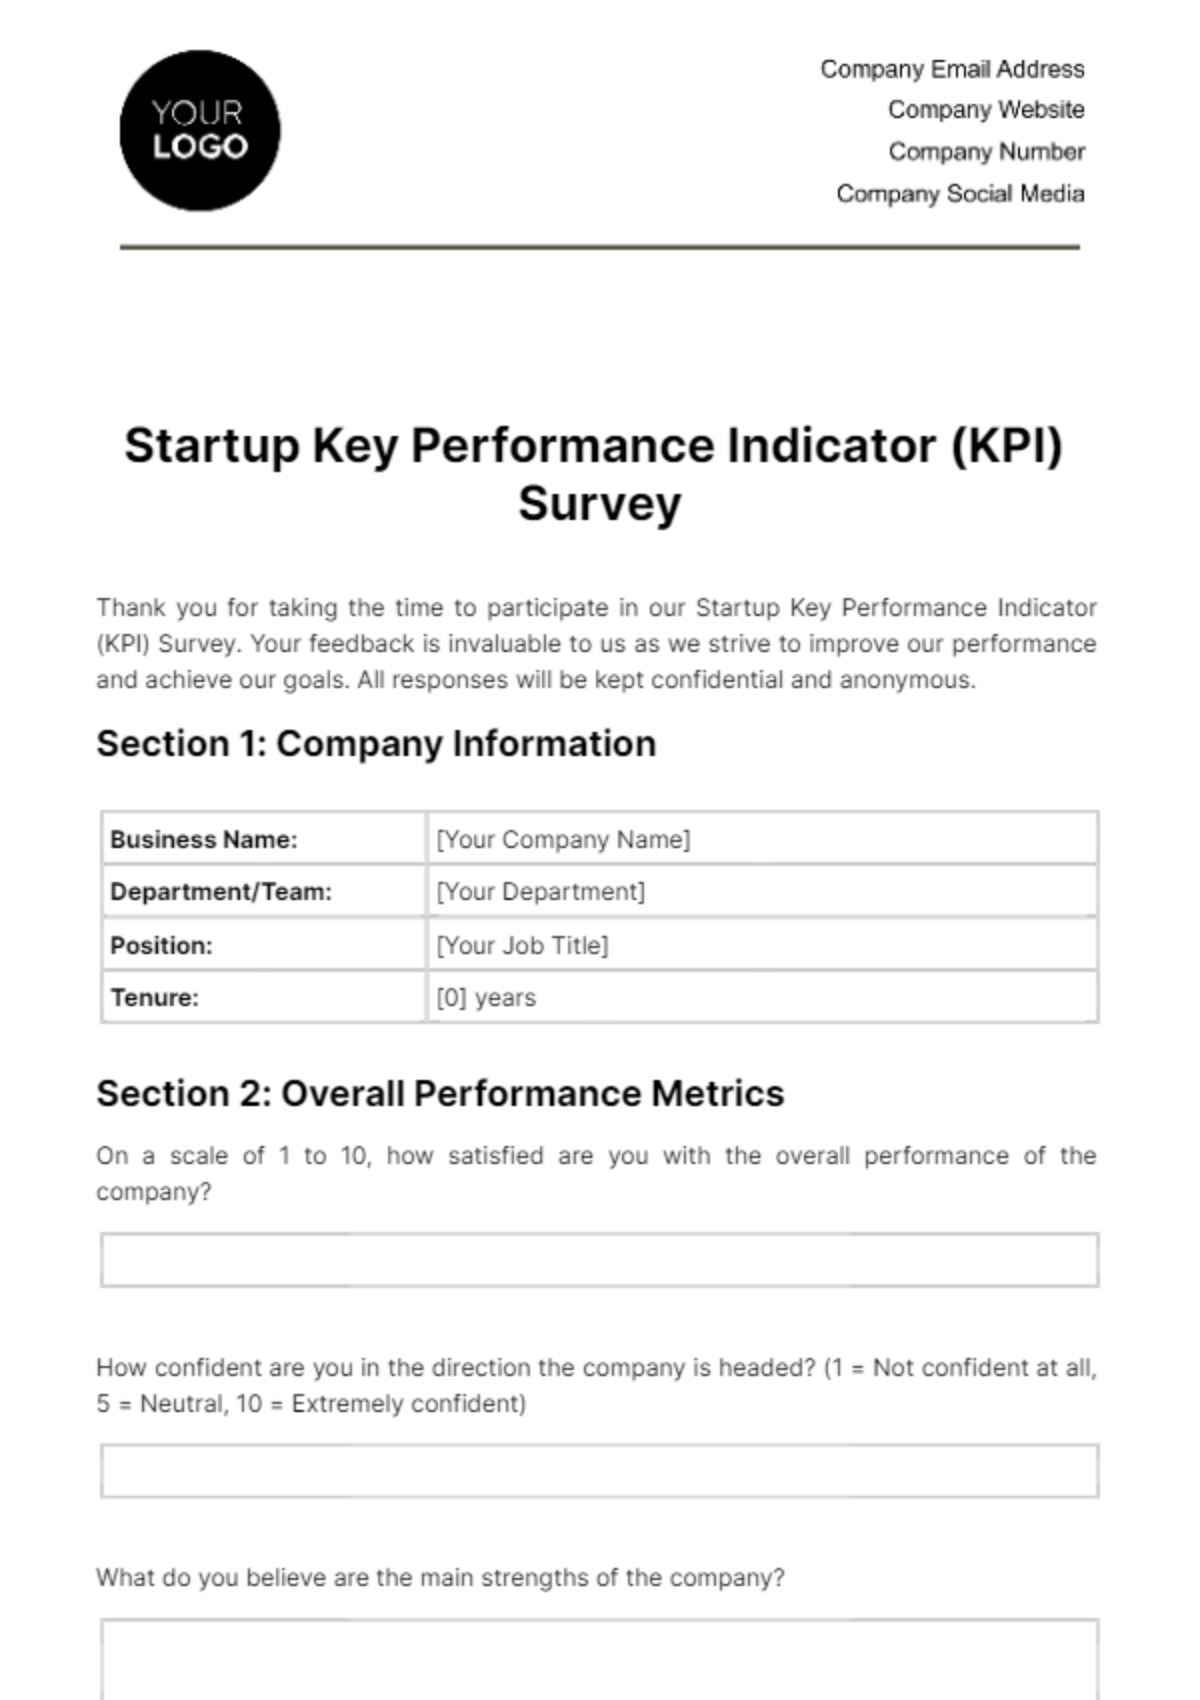 Free Startup Key Performance Indicator (KPI) Survey Template